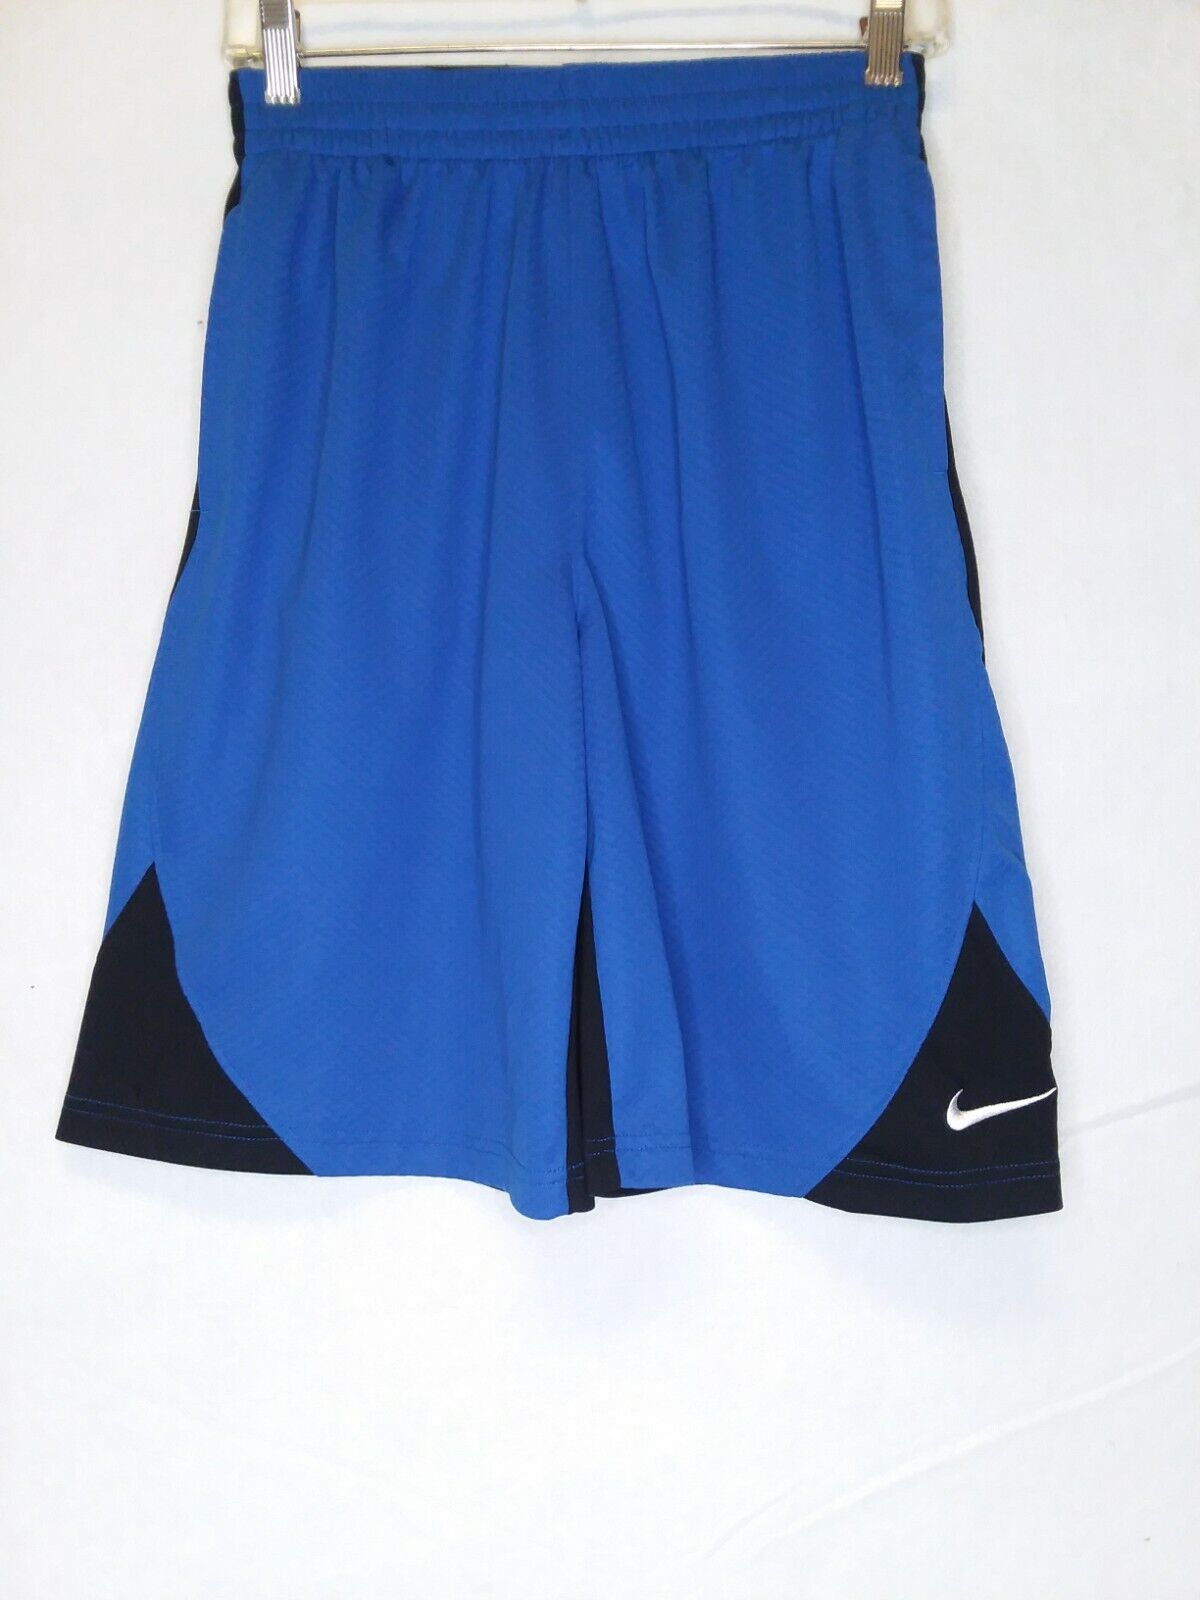 Youth Nike Dri-fit Shorts Size Xl Black & Blue Waist 25-28"  Inseam 10"